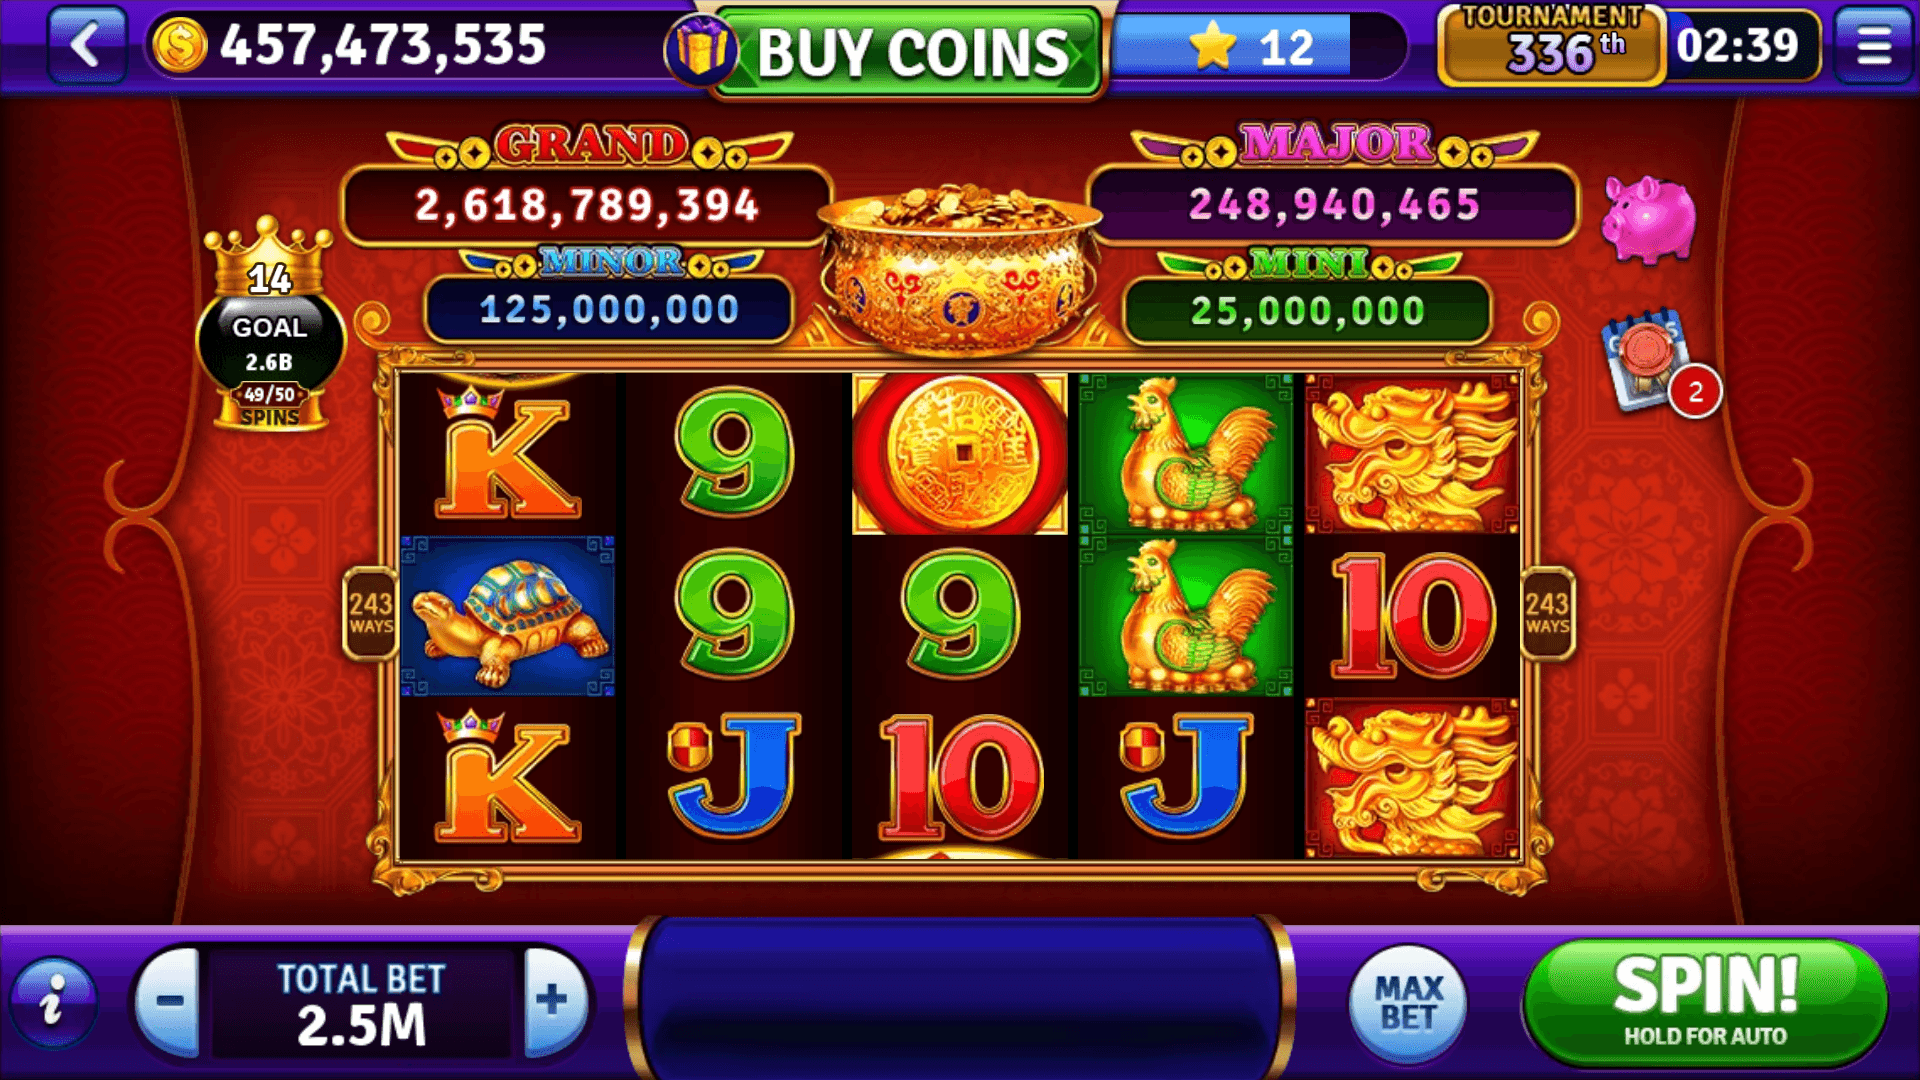 Tycoon casino free vegas jackpot slots mod apk